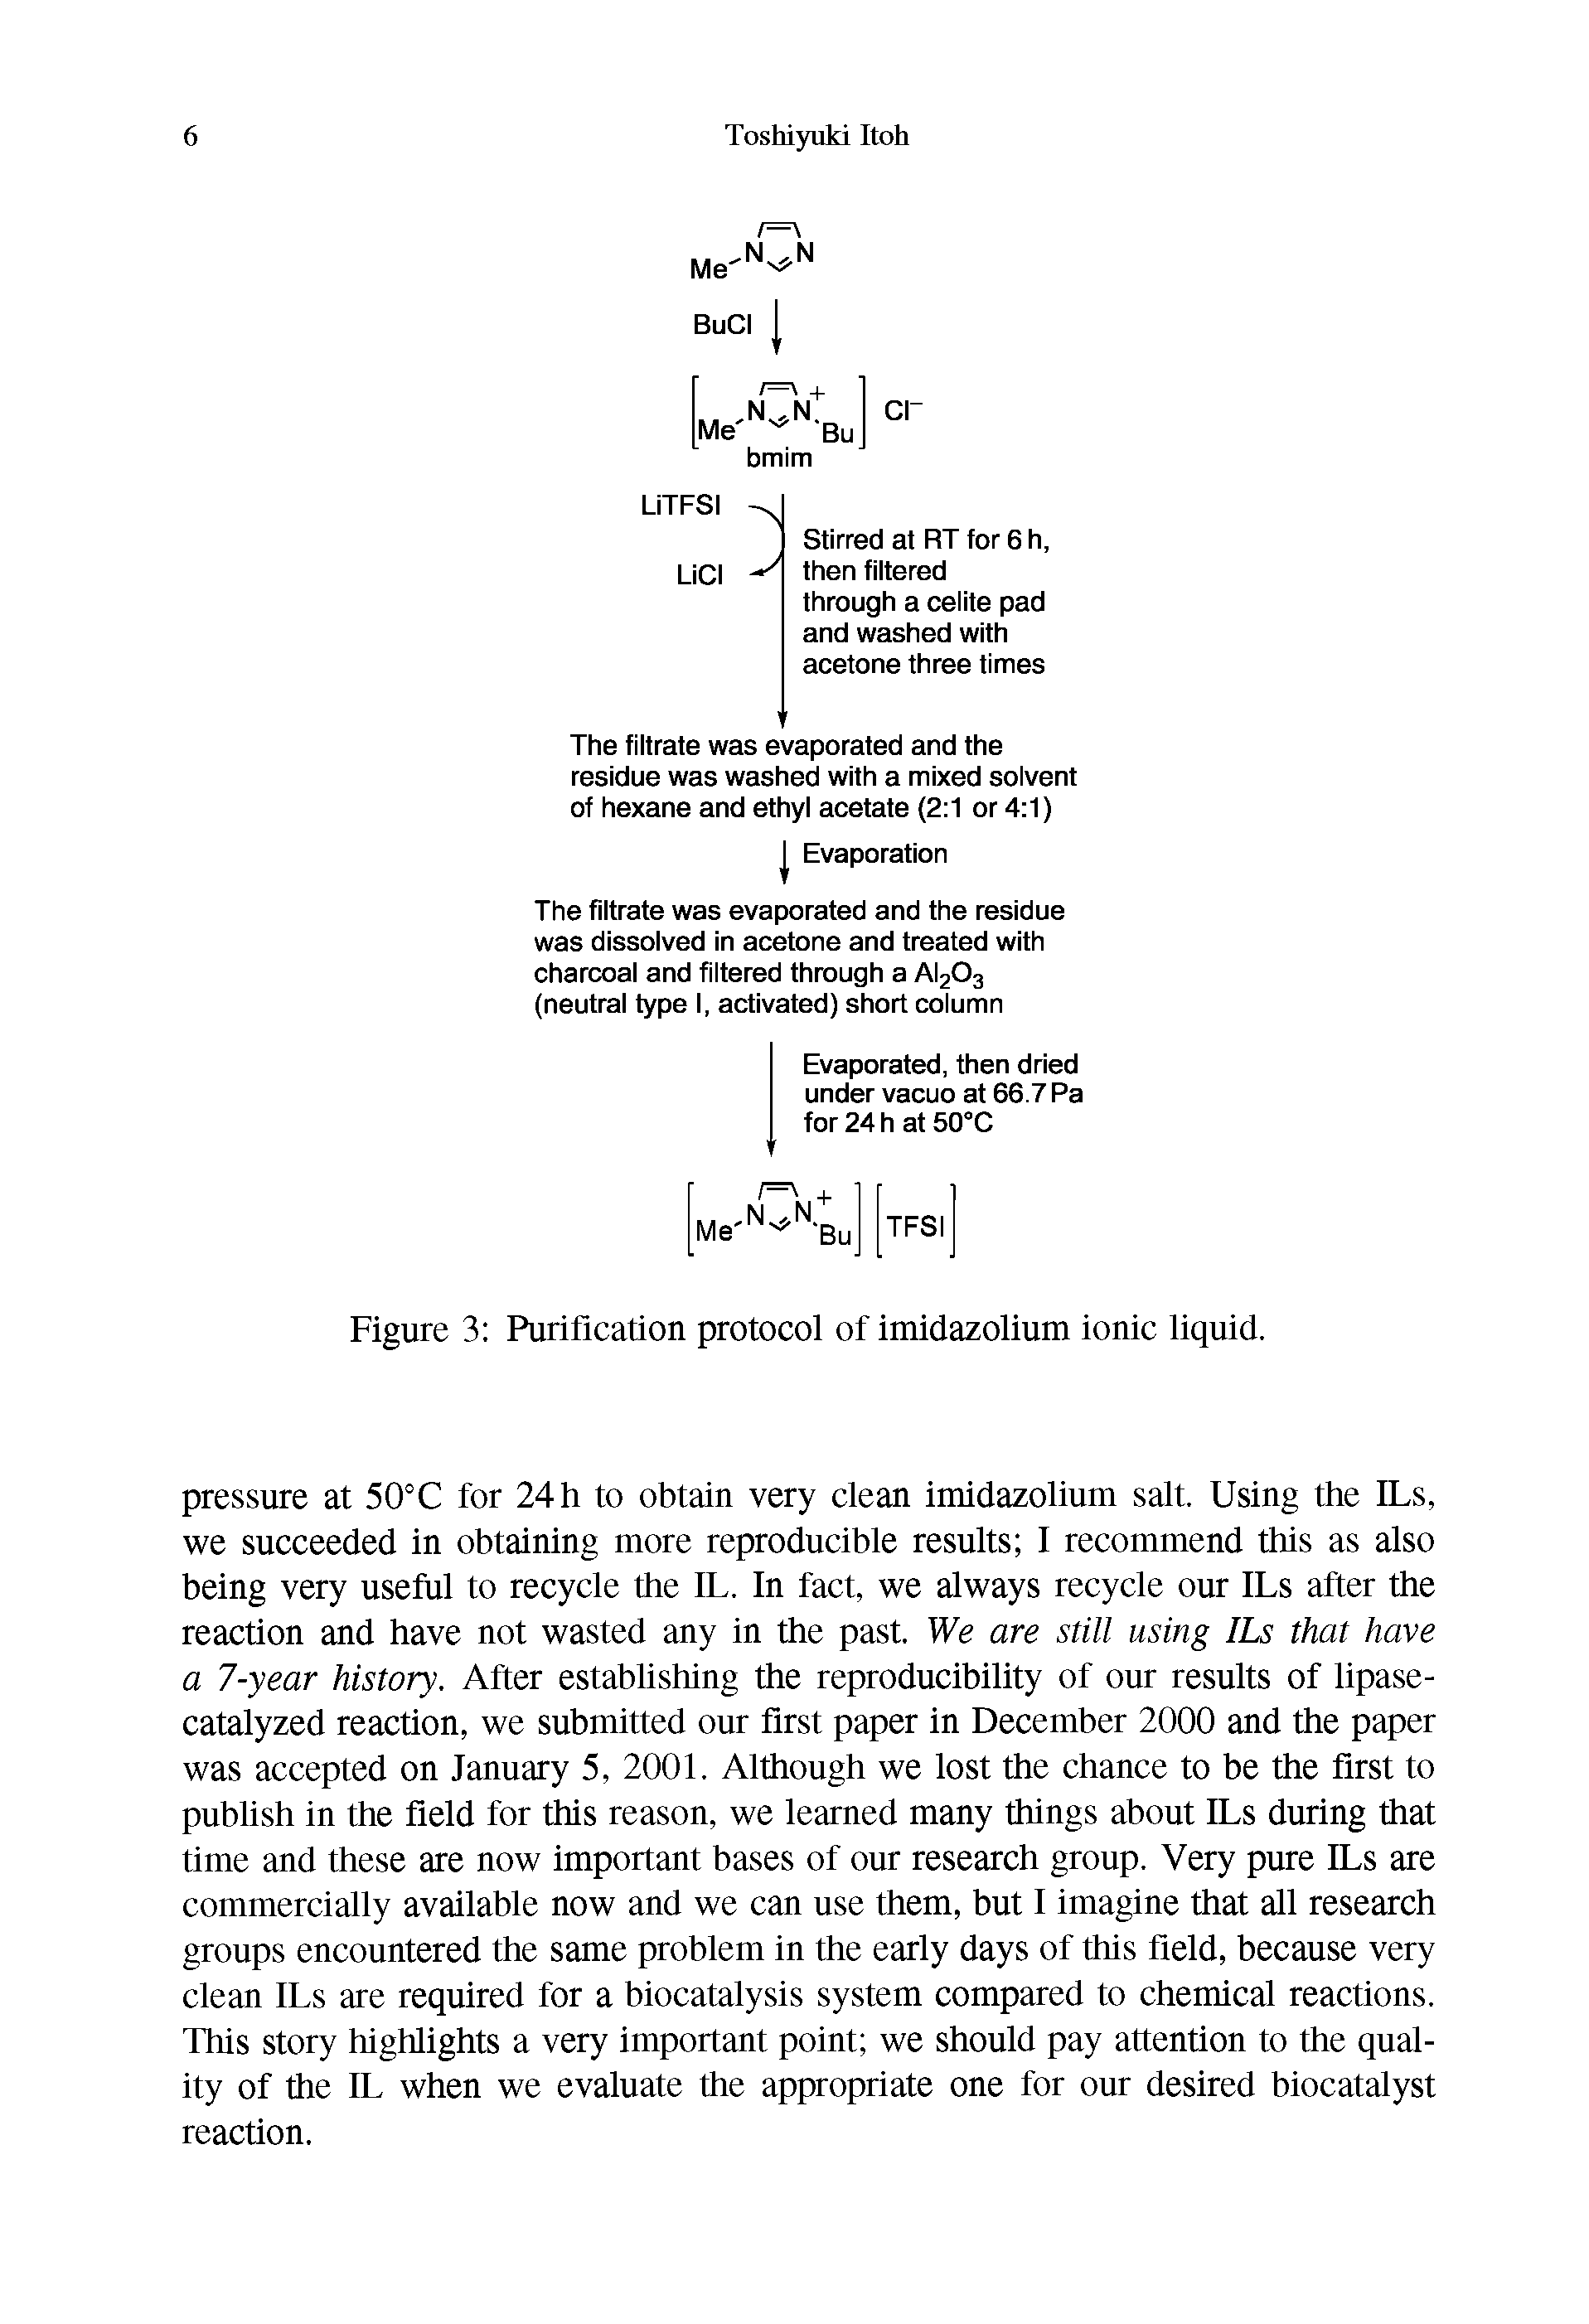 Figure 3 Purification protocol of imidazolium ionic liquid.